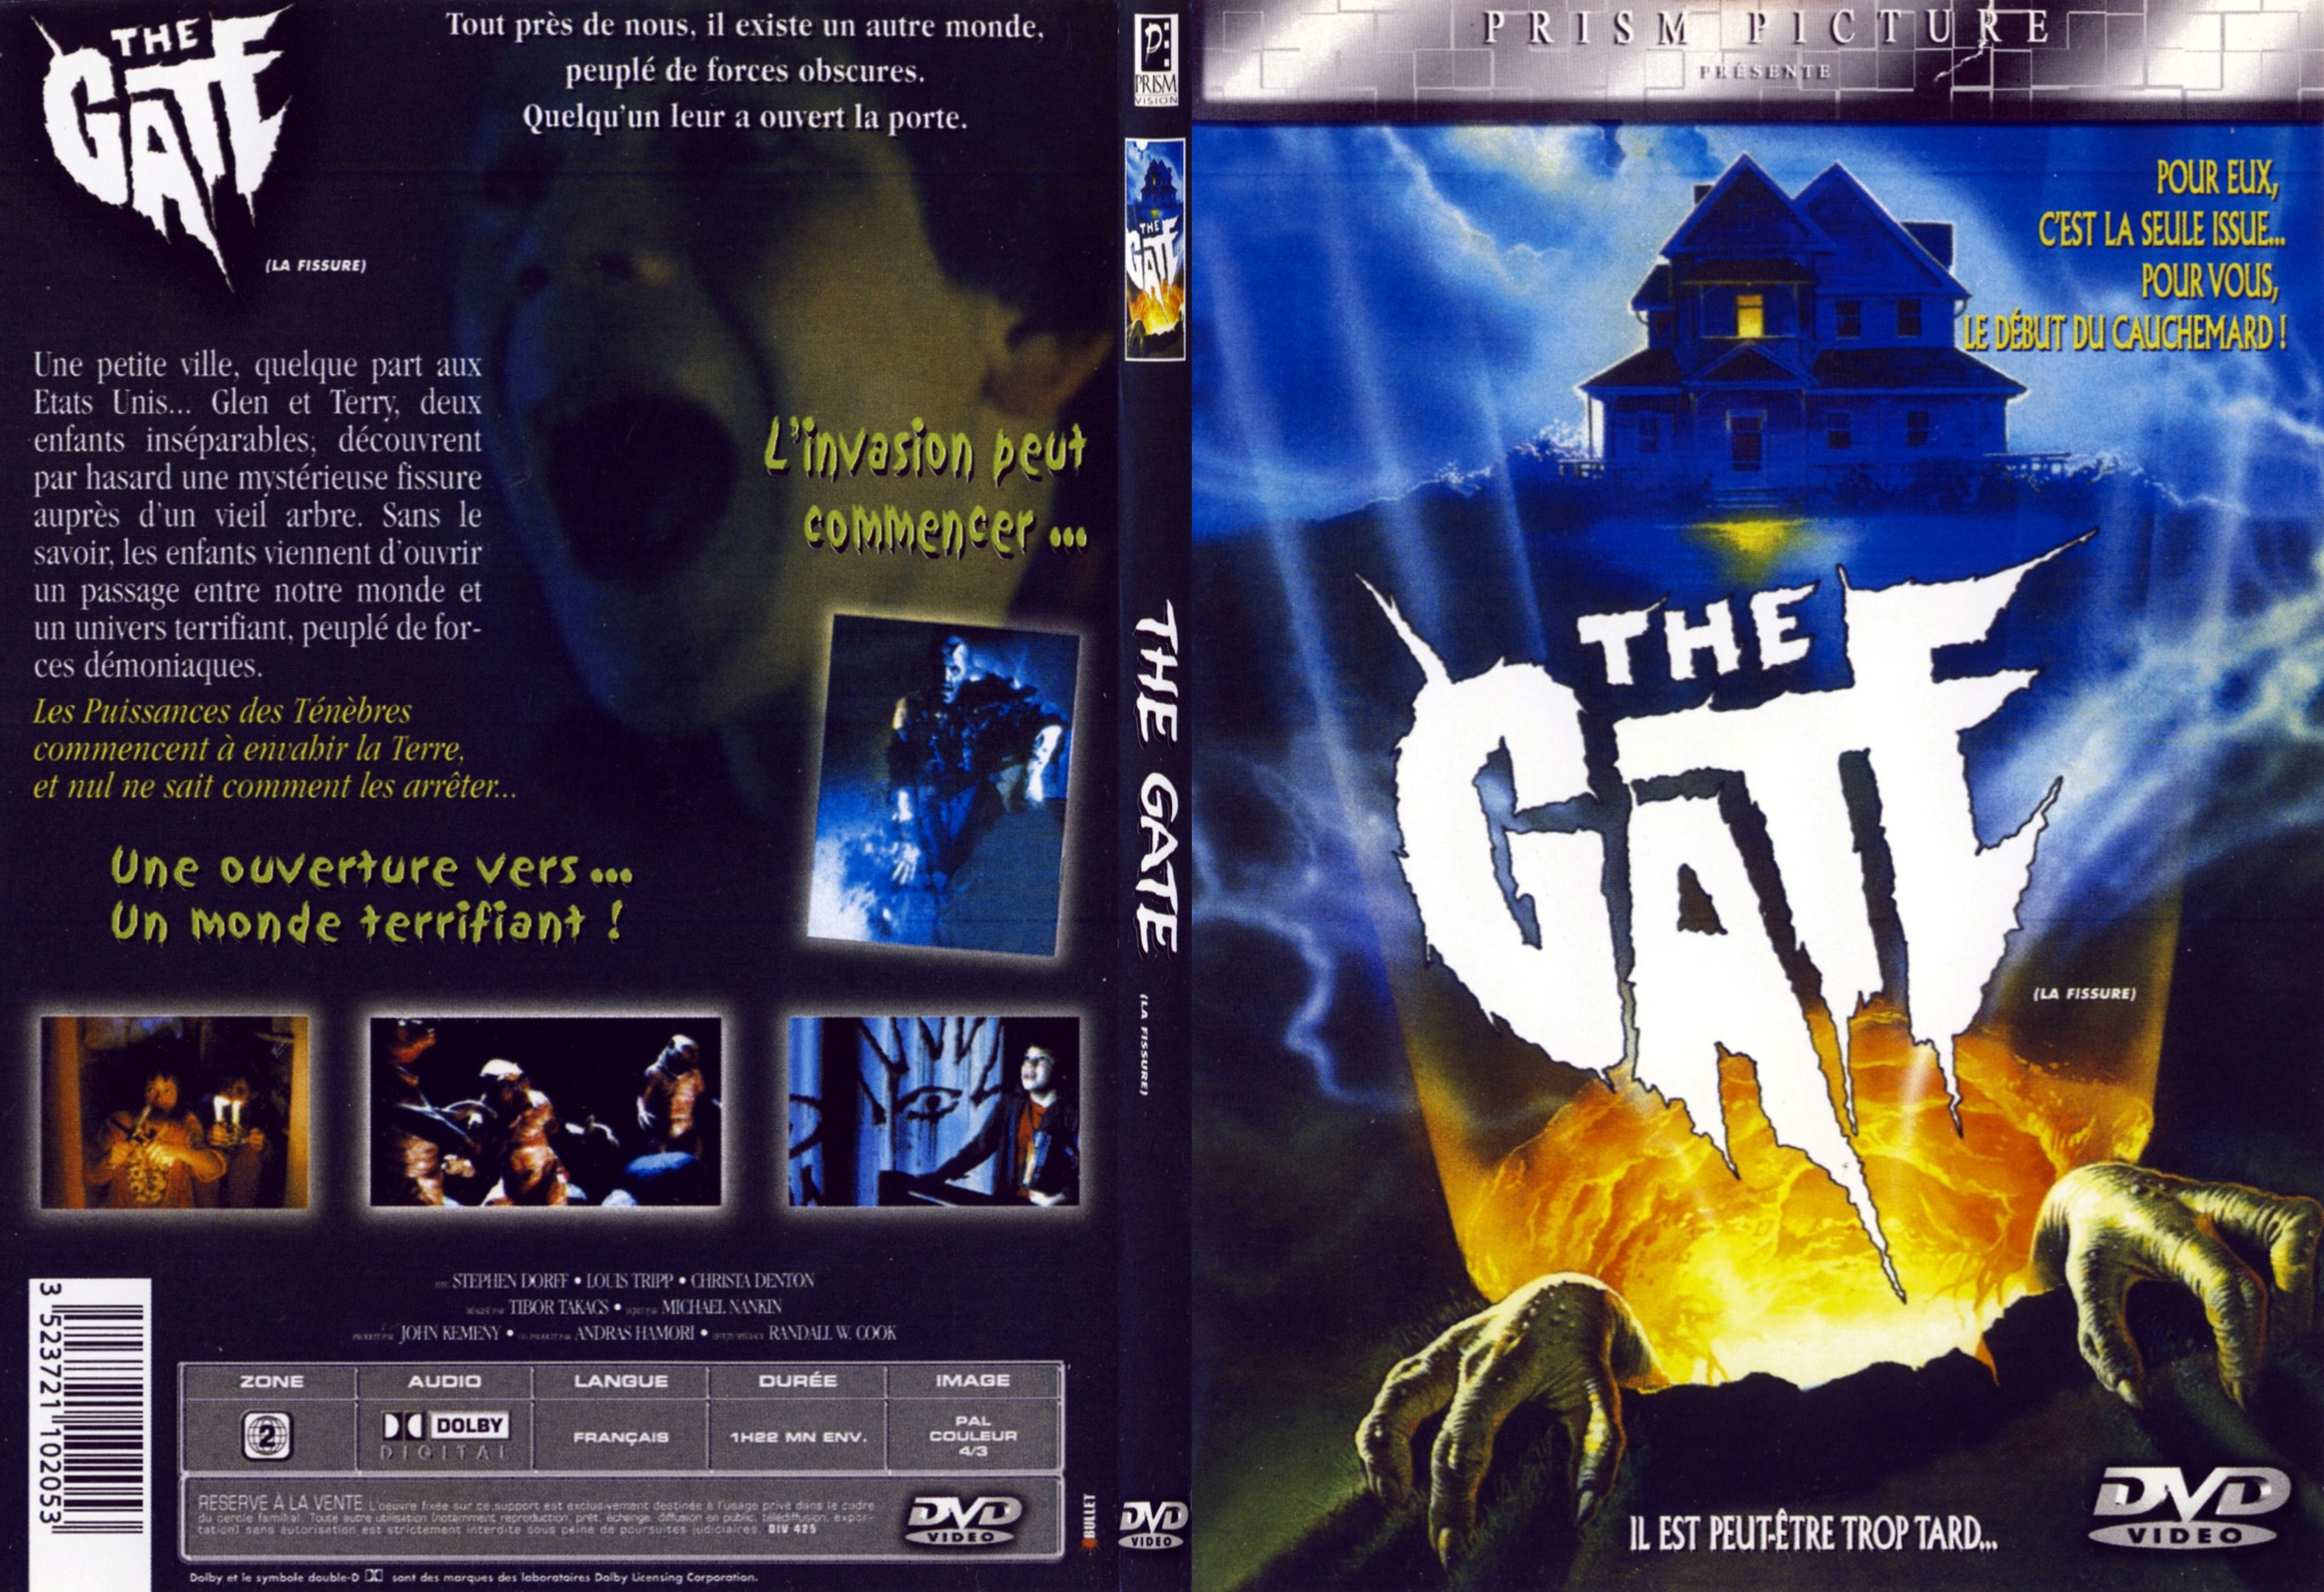 Jaquette DVD The gate - SLIM